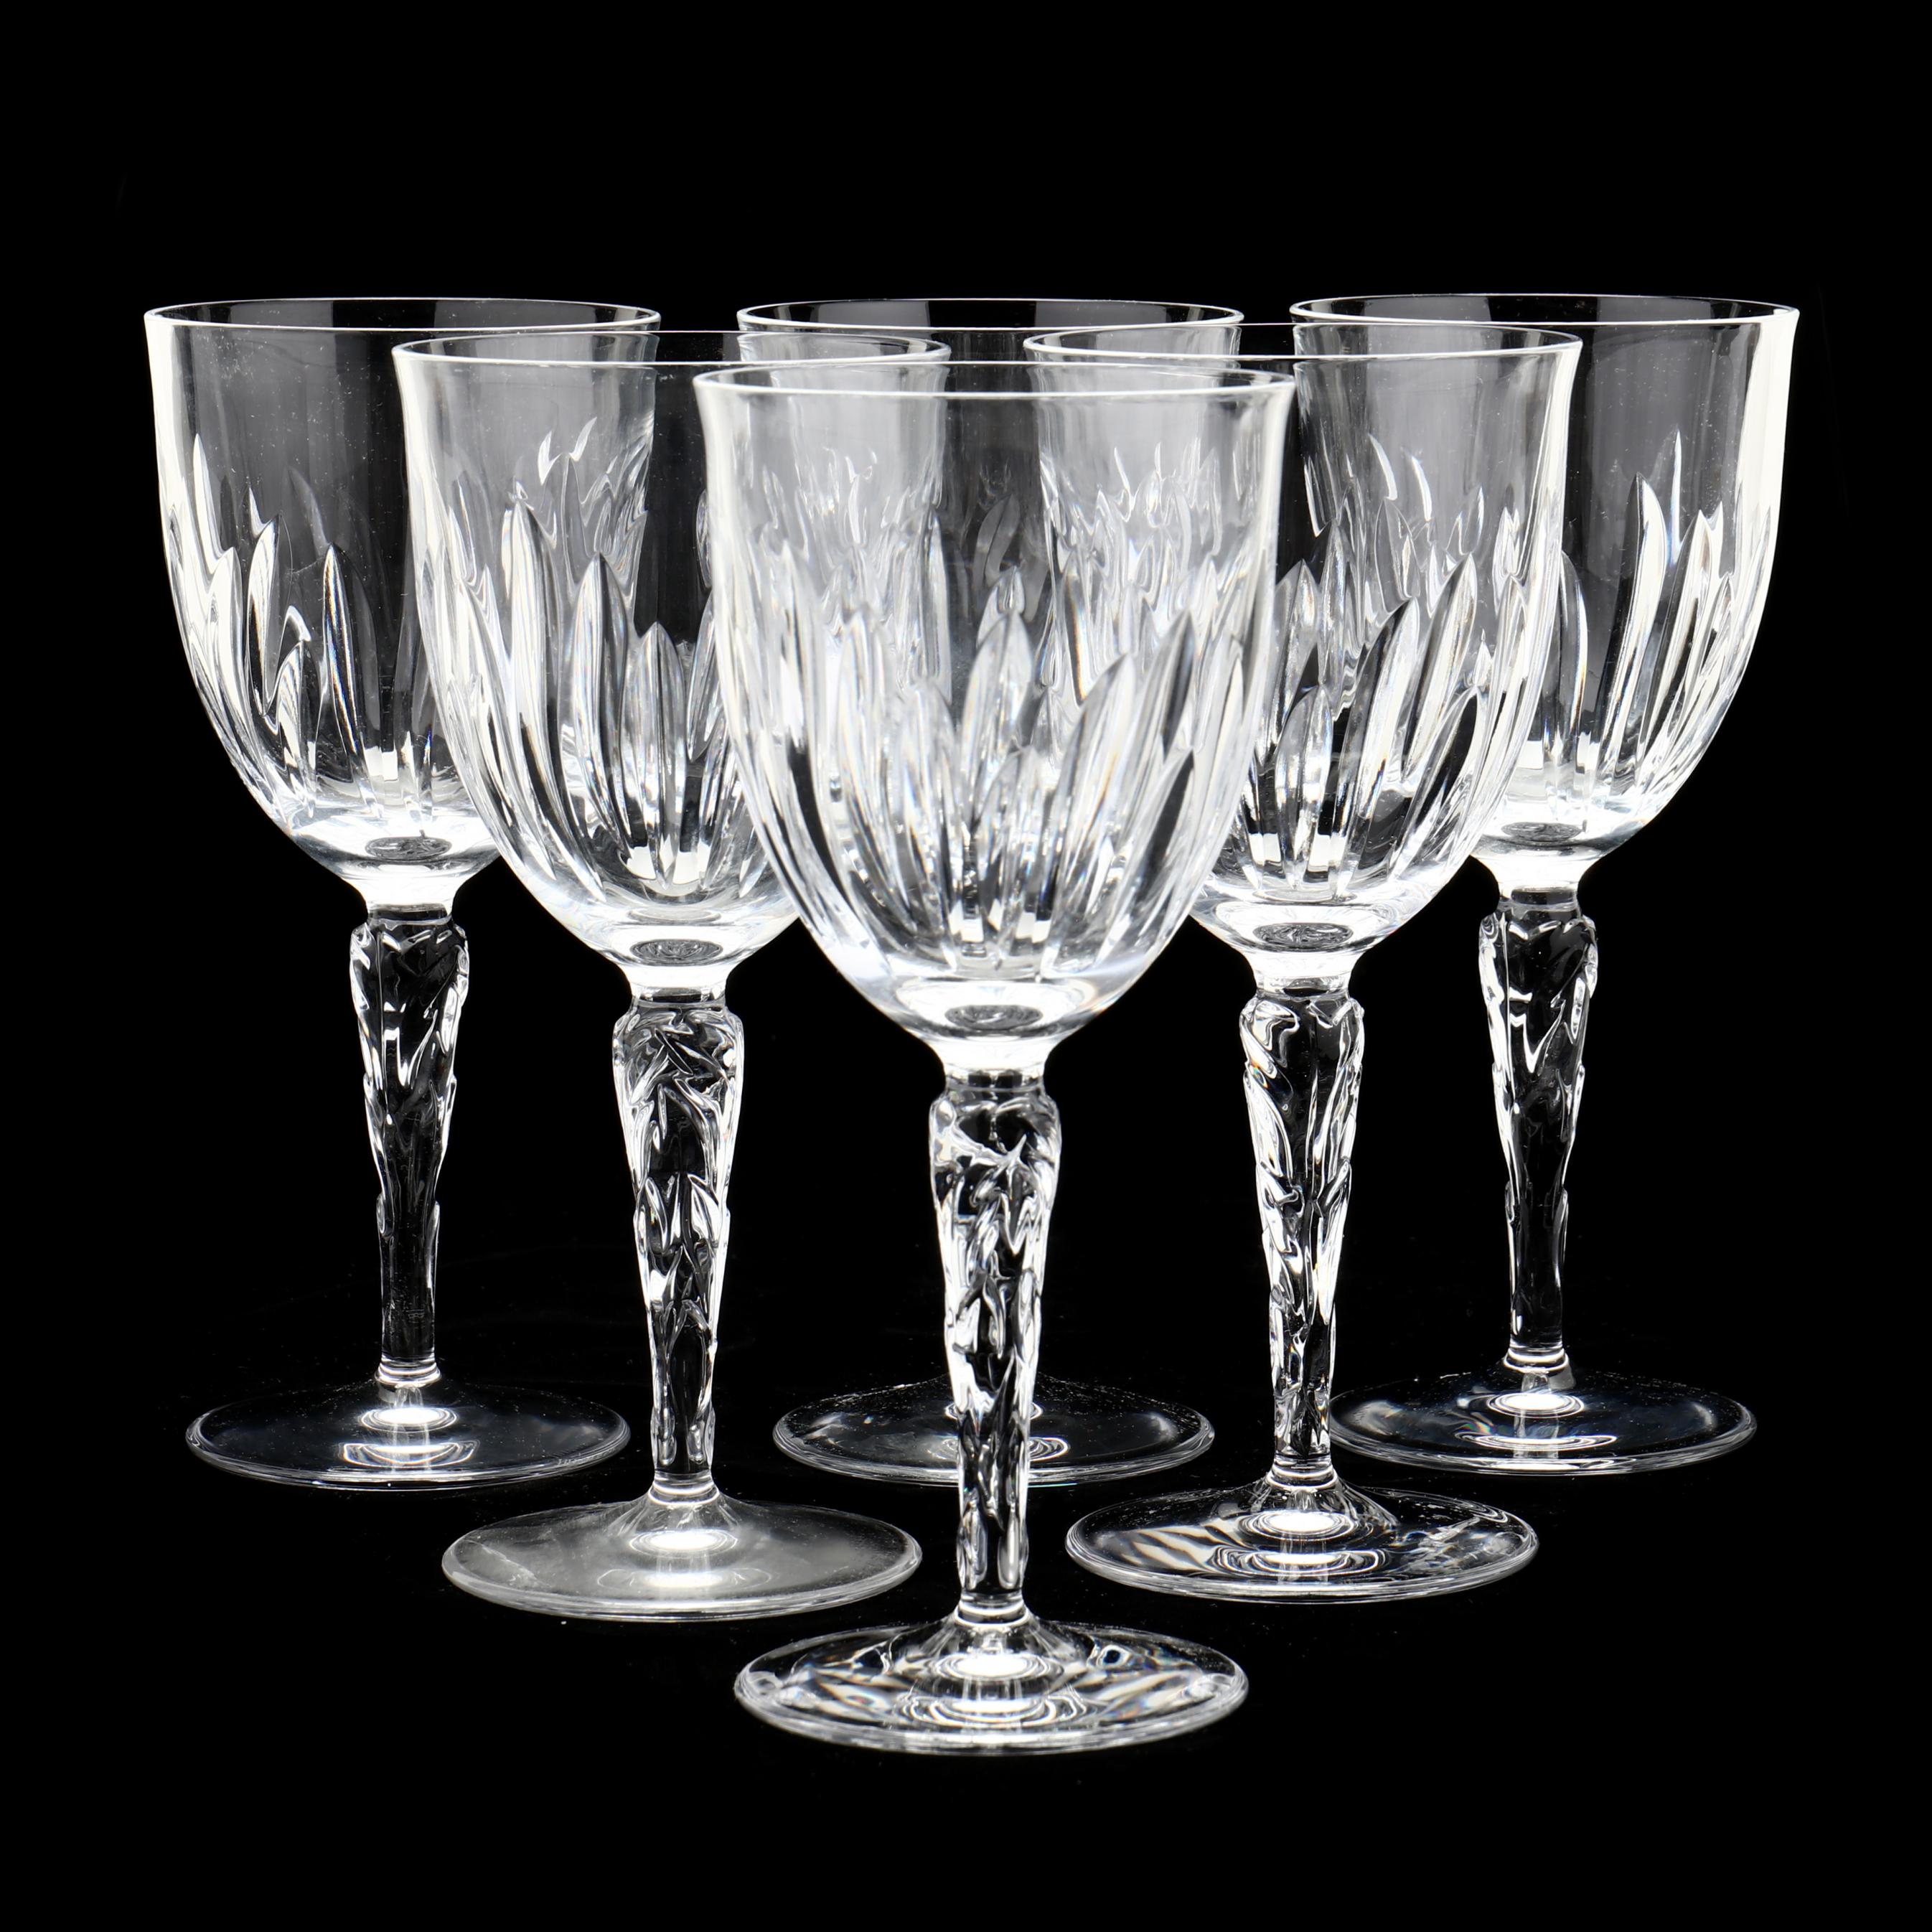 Tiffany & Co. Textured Translucent Crystal Wine Glasses - Set of